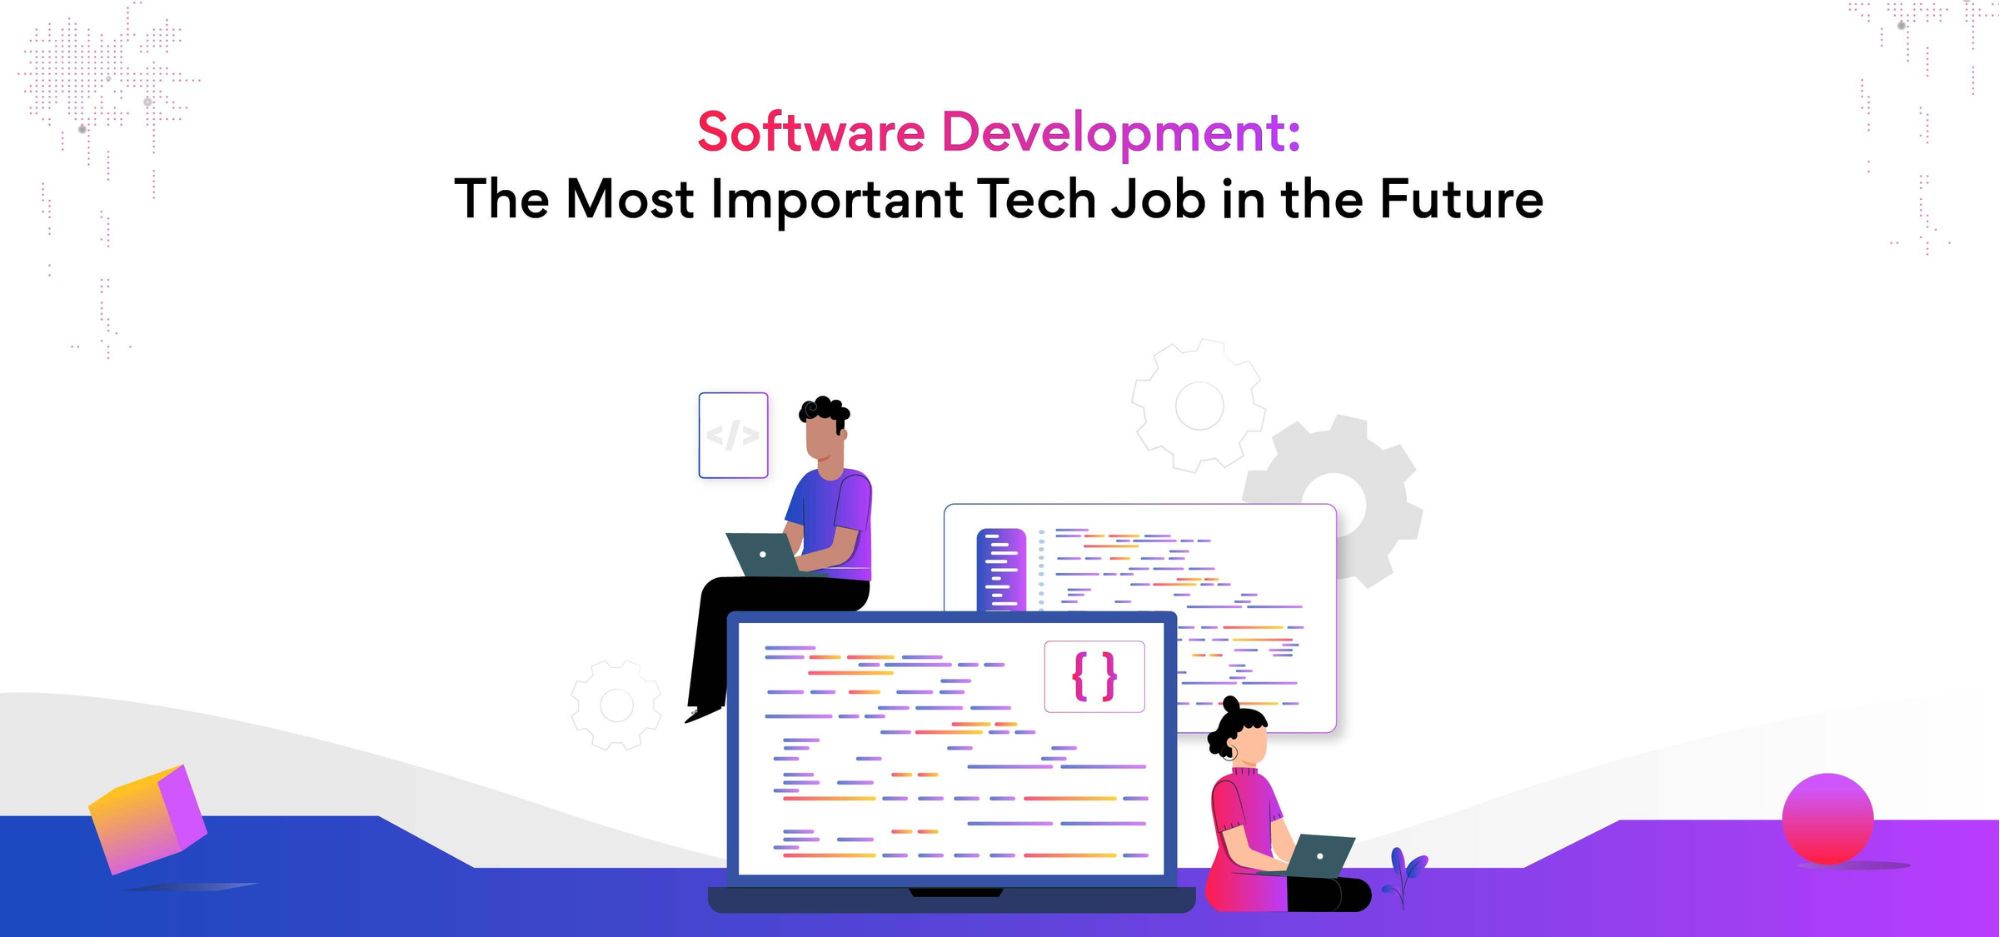 Software developer most important tech job in the future